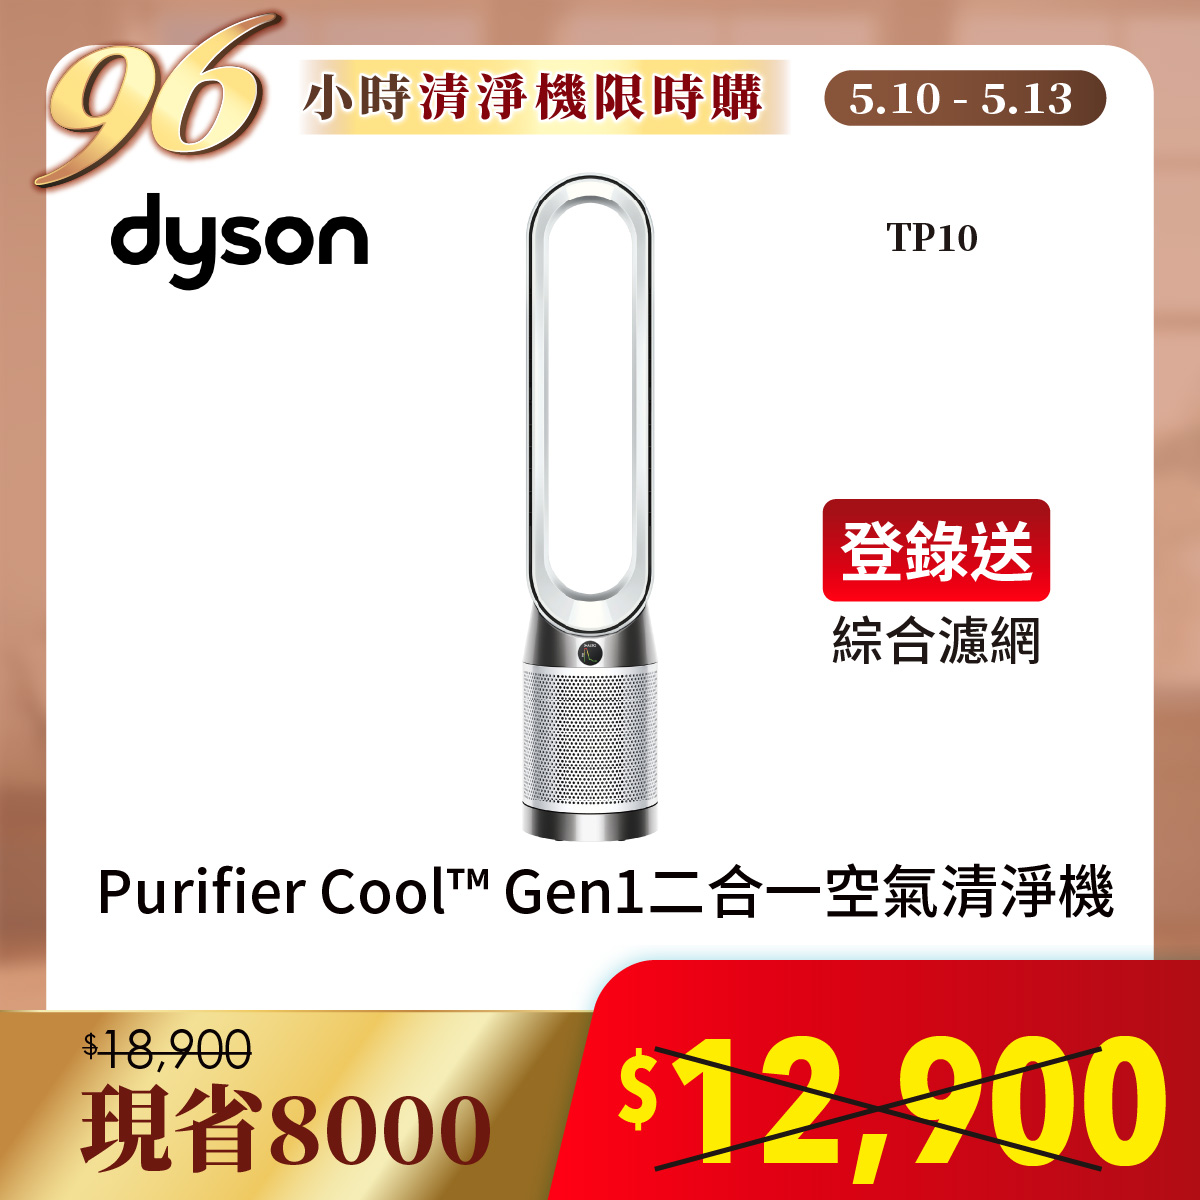 Dyson 二合一空氣清淨機TP10(白色)